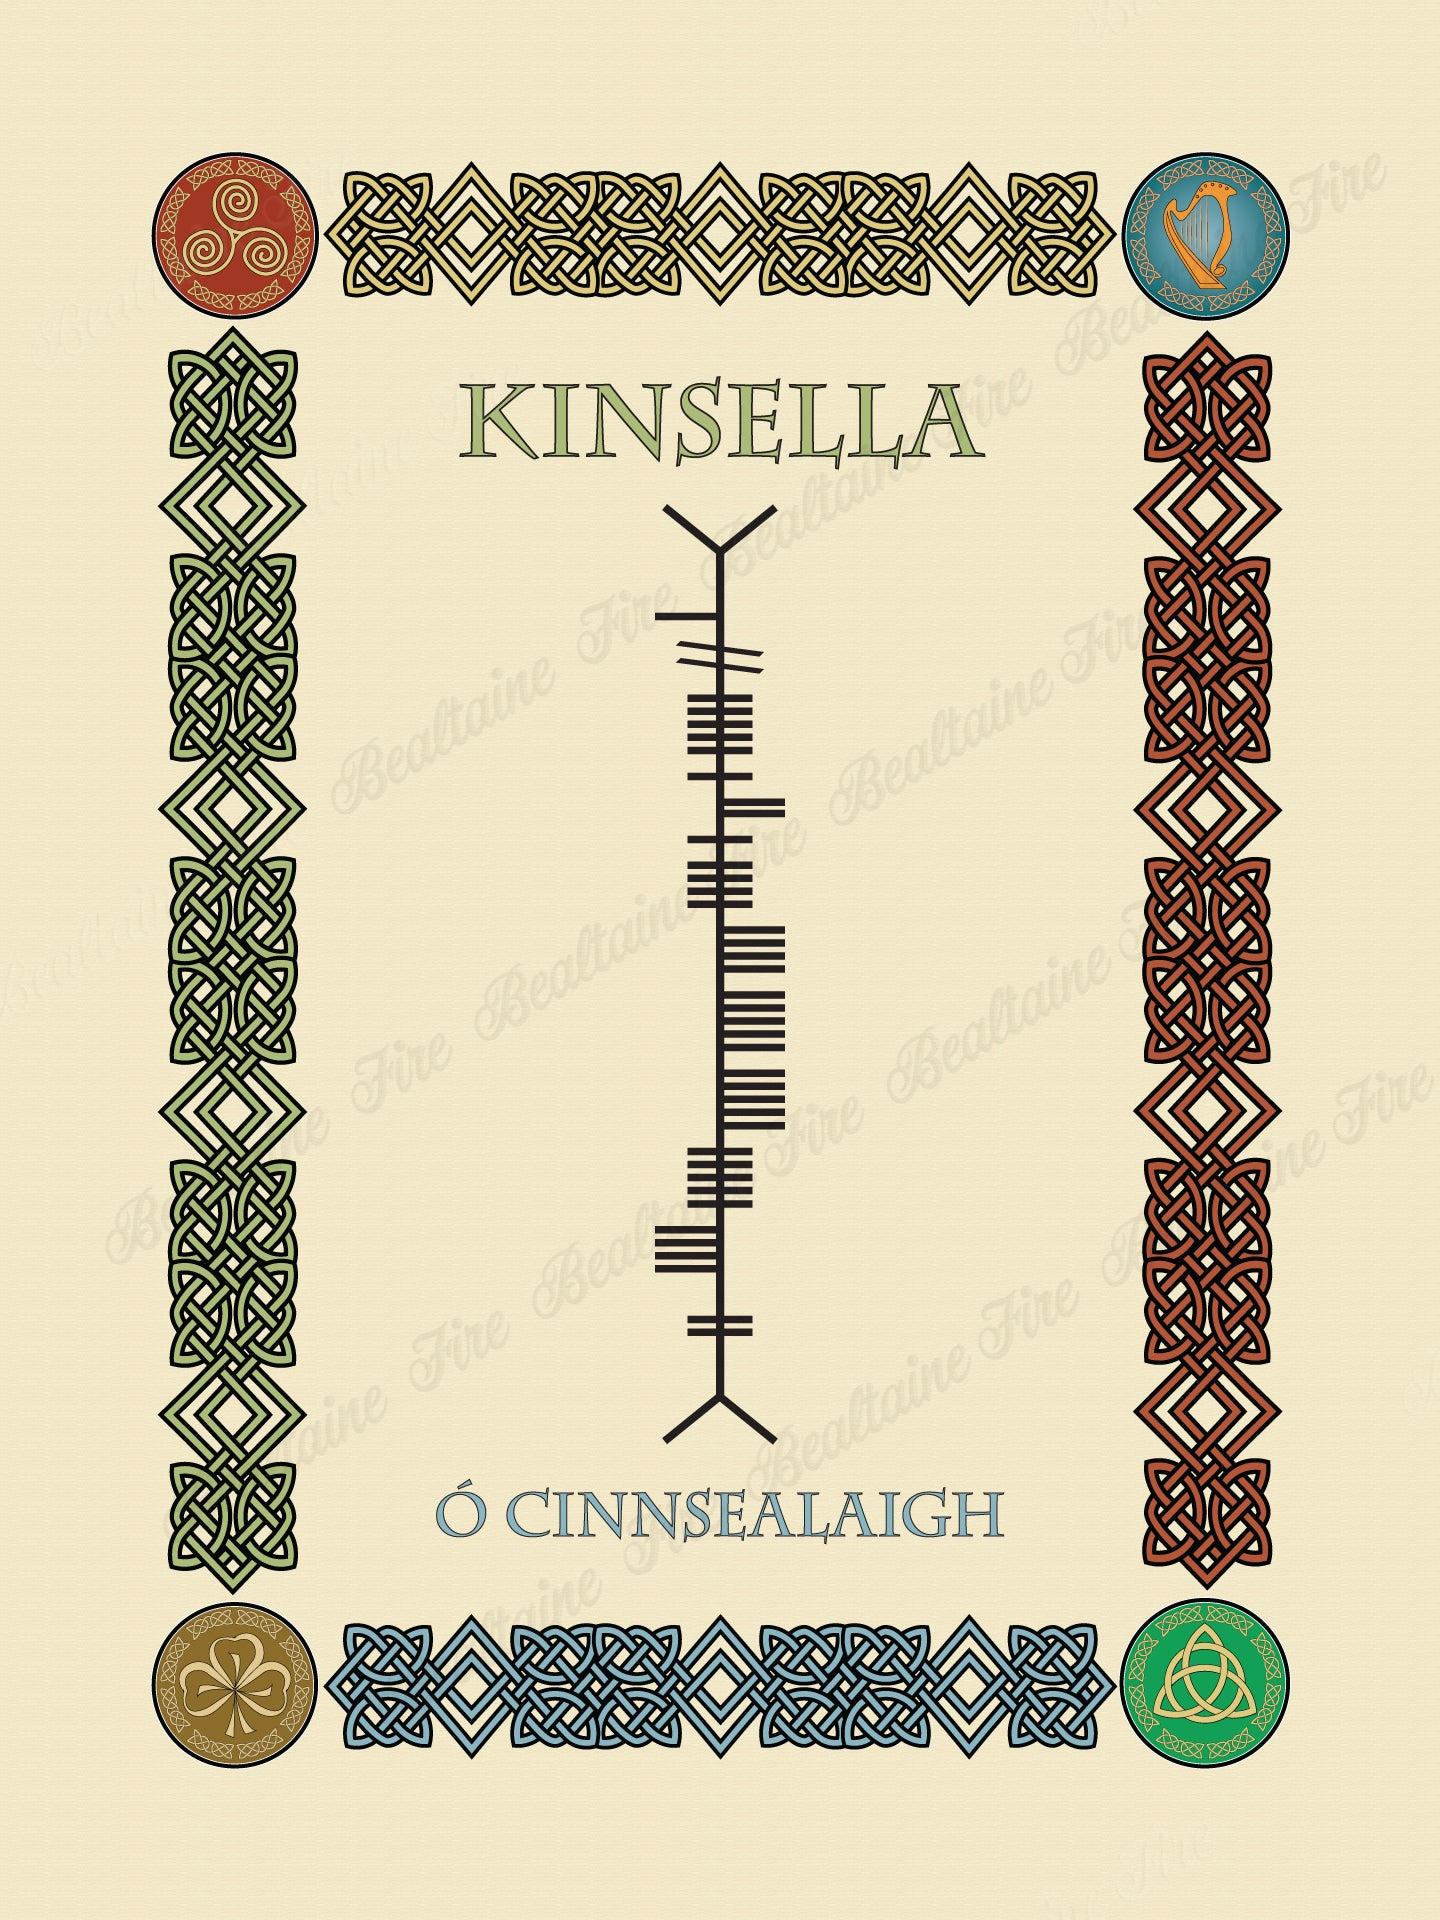 Kinsella in Old Irish and Ogham - PDF Download